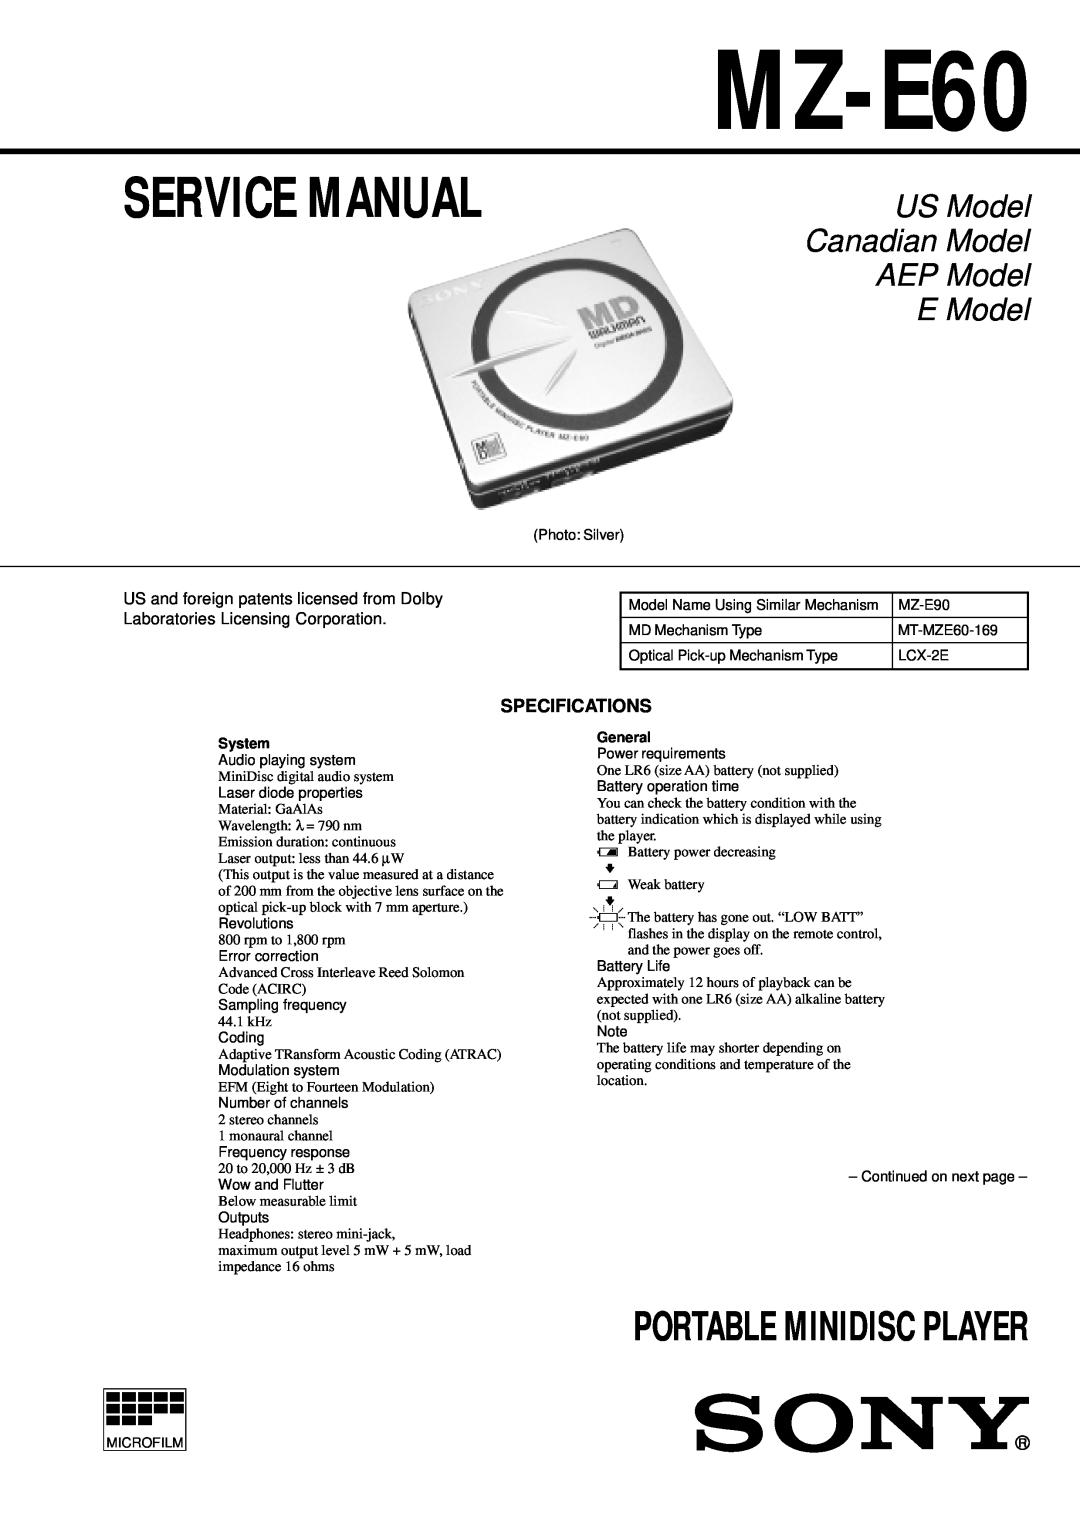 Sony MZ-E90 service manual Specifications, MZ-E60, US Model Canadian Model AEP Model E Model, Portable Minidisc Player 